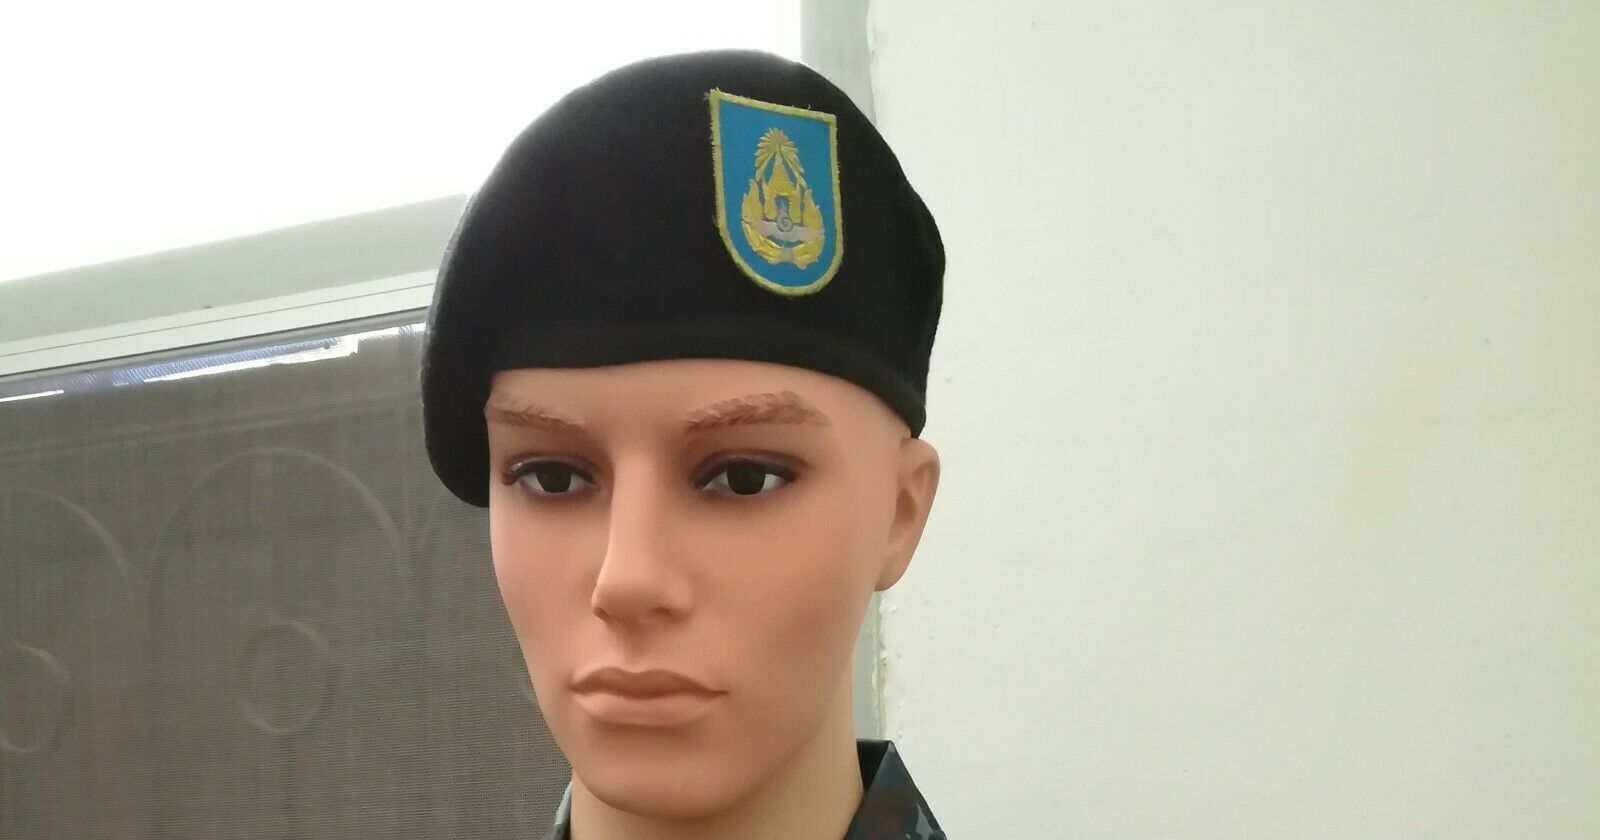 air force eod beret